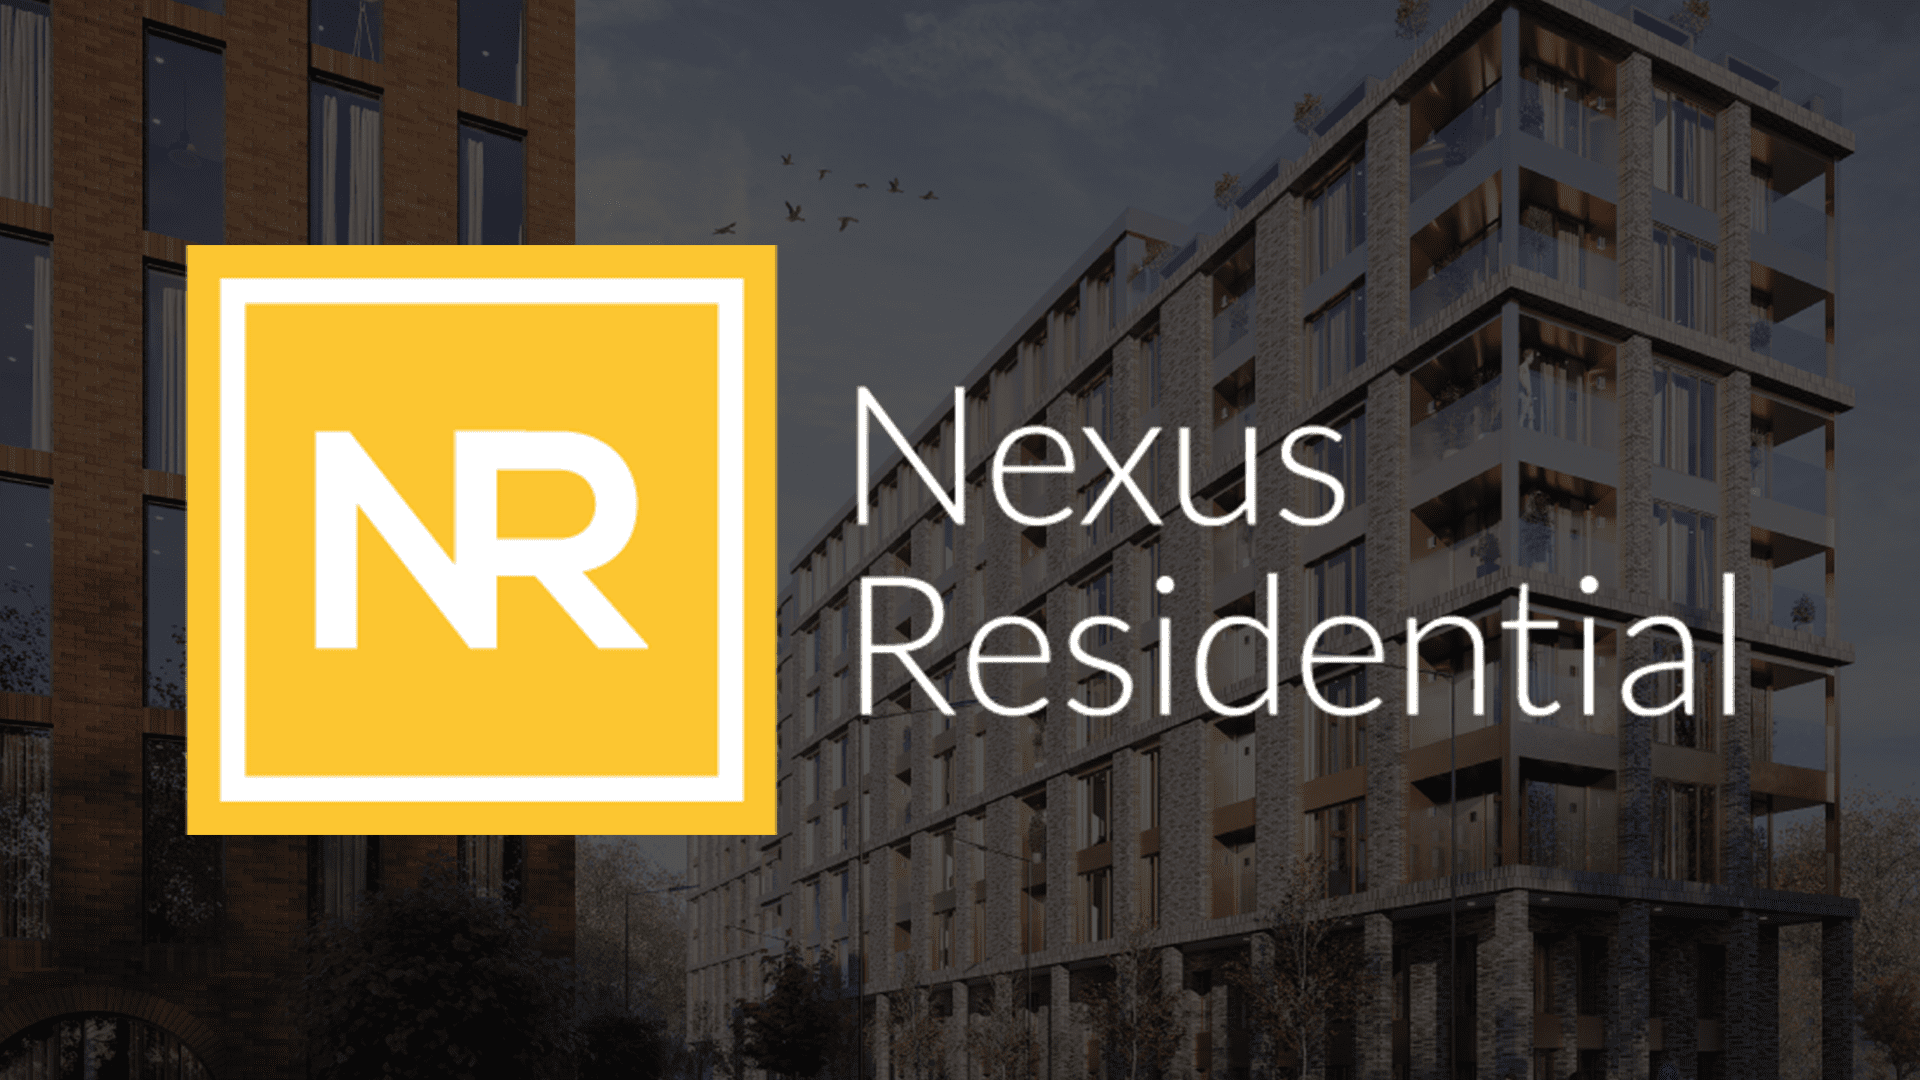 Brand image of Nexus Residential